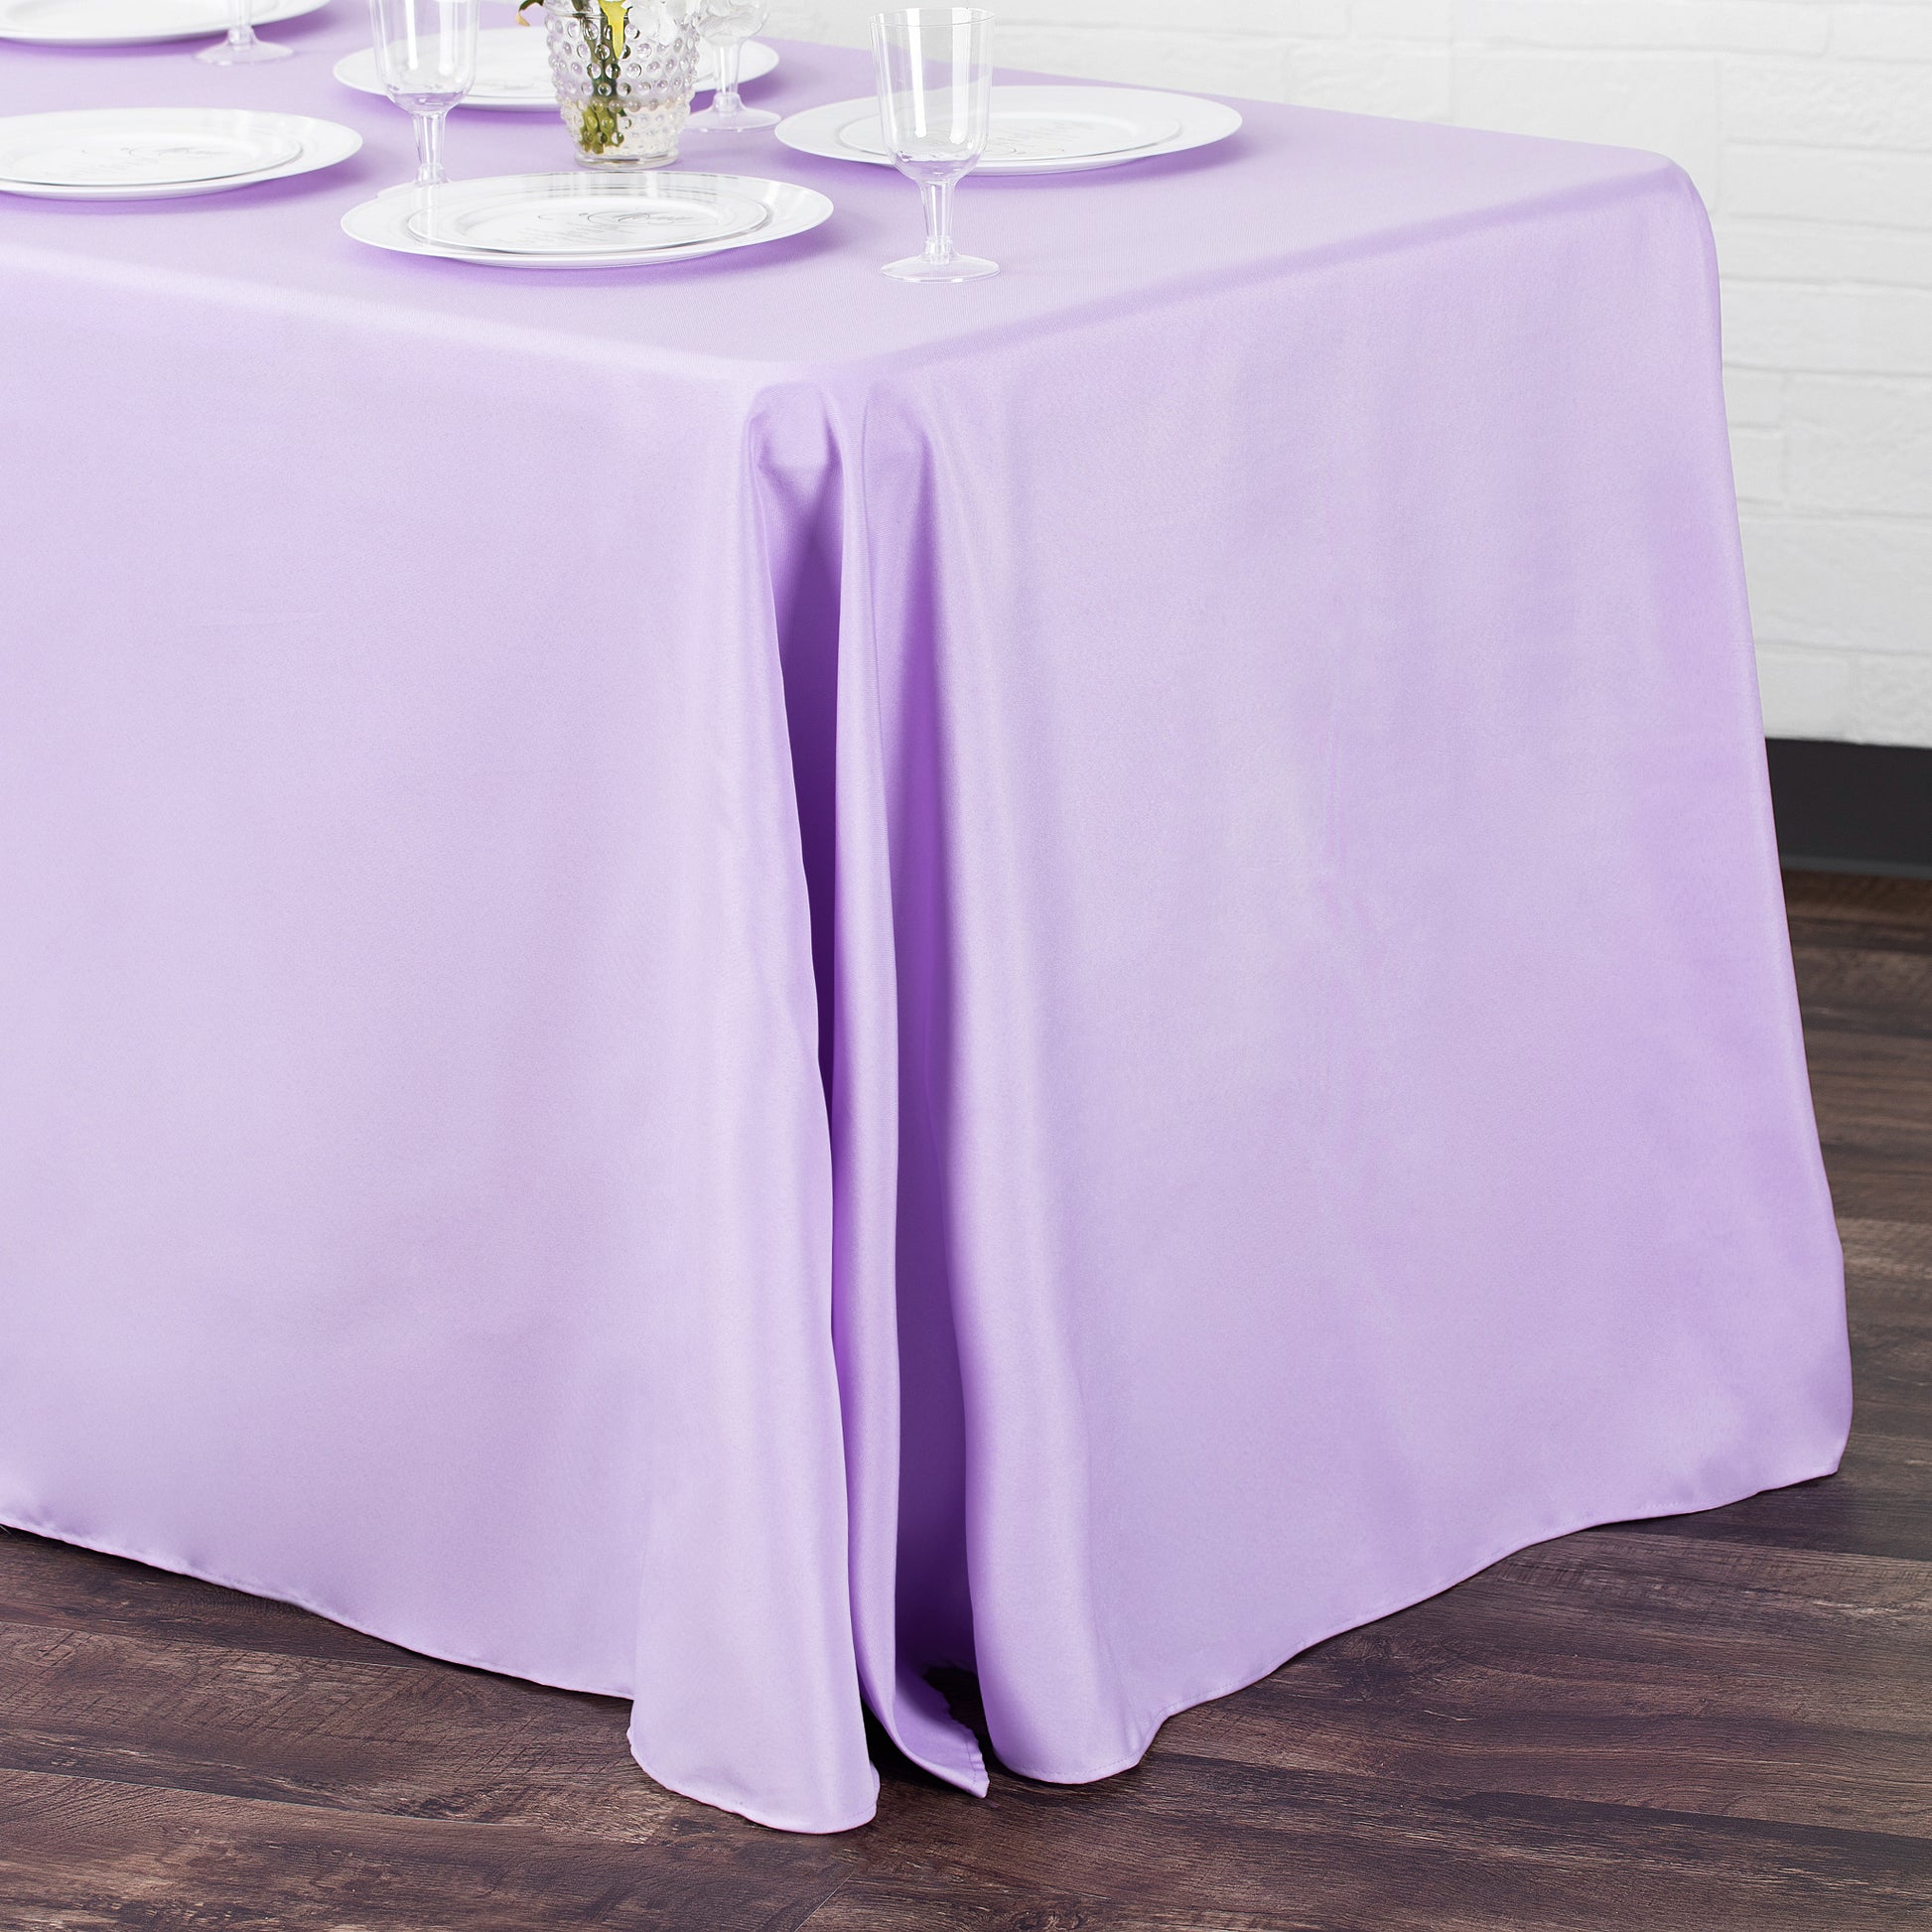 Economy Polyester Tablecloth 90"x132" Oblong Rectangular - Lavender - CV Linens